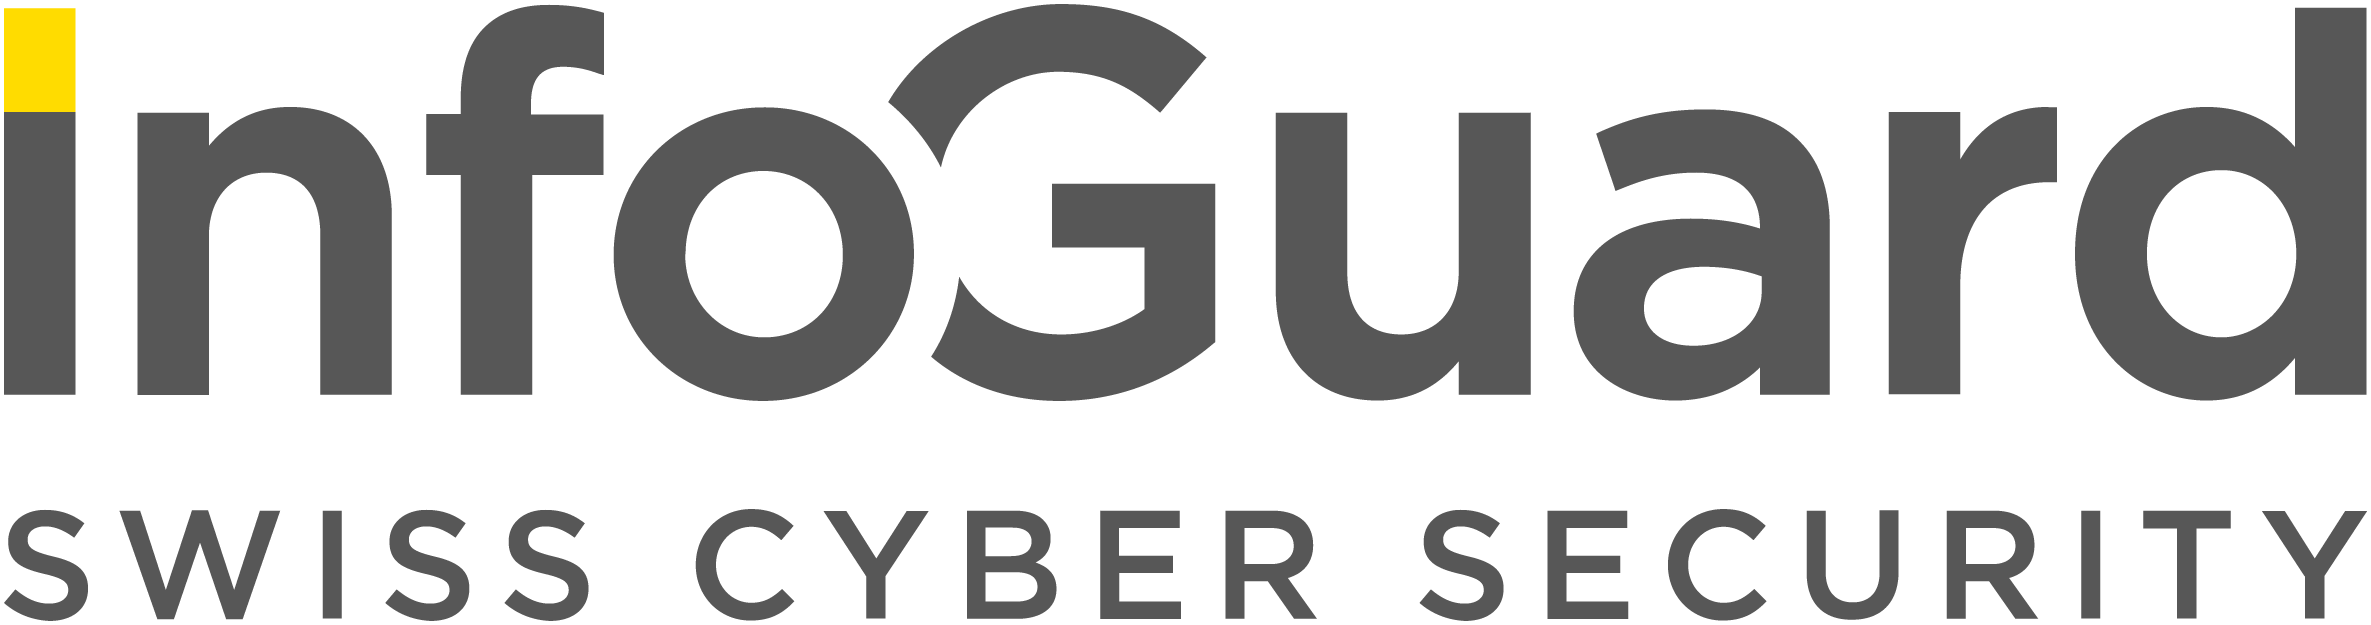 Swiss Cyber Security Blog